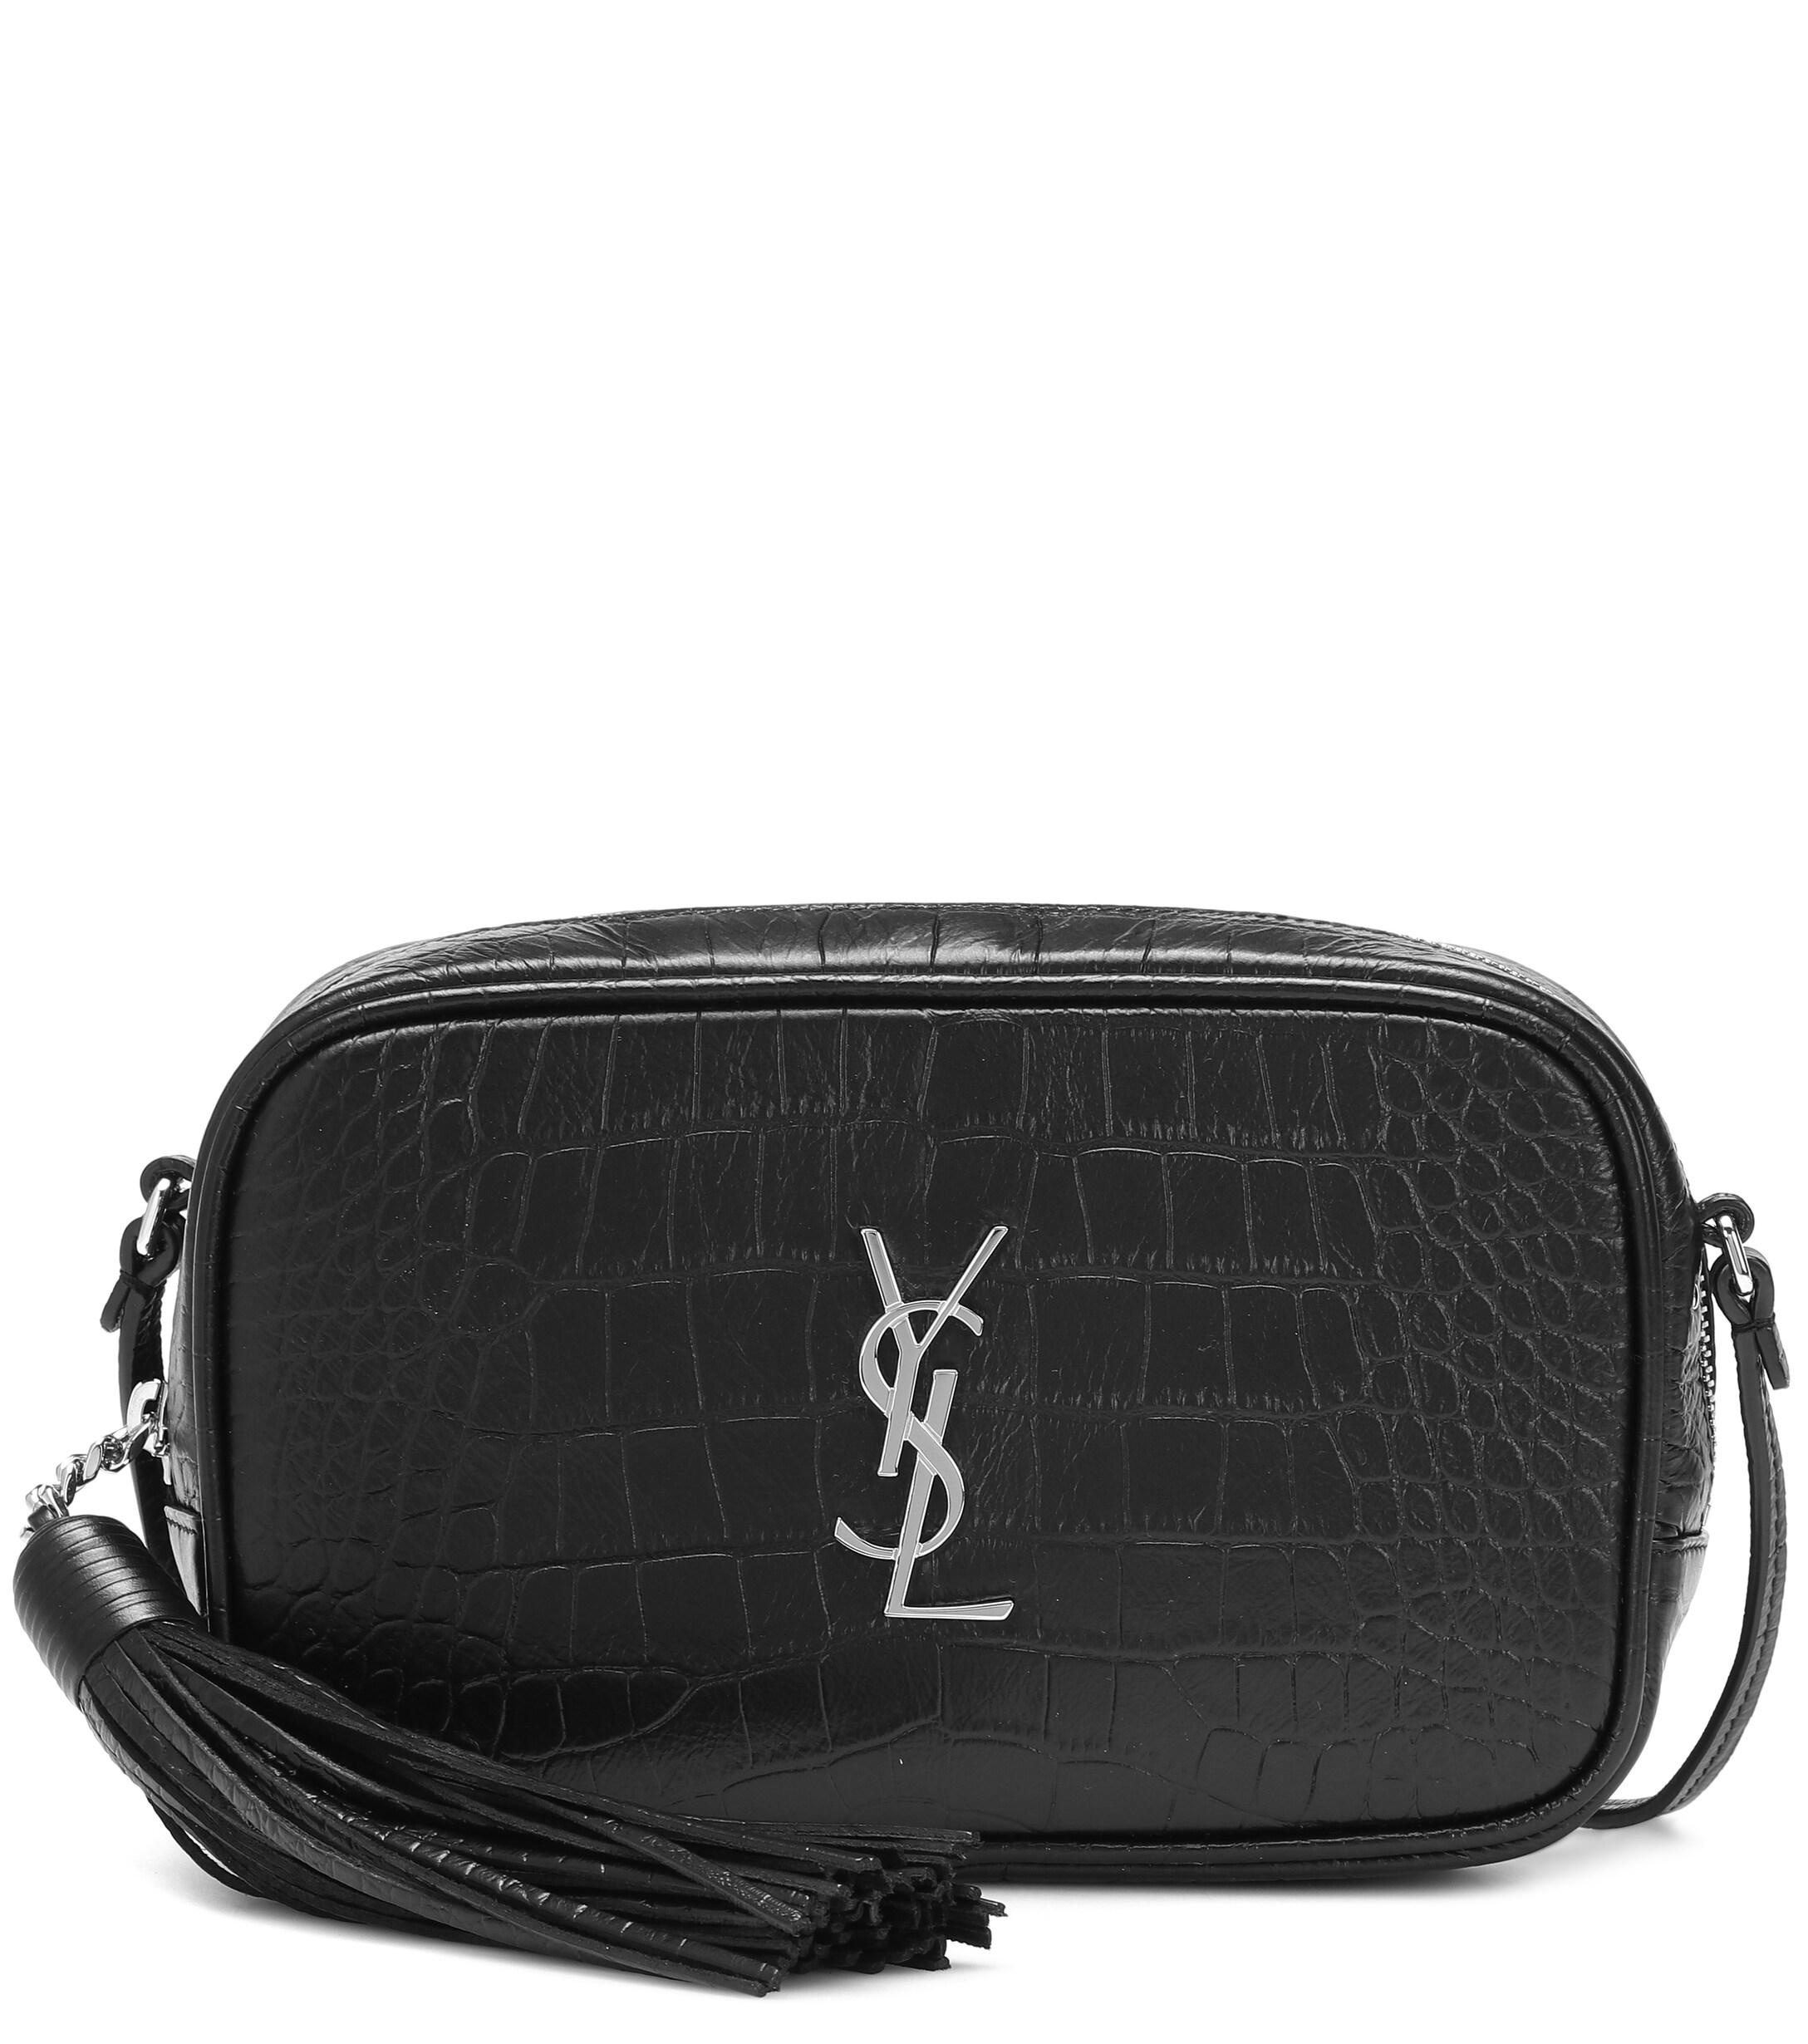 Saint Laurent Lou Camera Leather Crossbody Bag in Black - Lyst